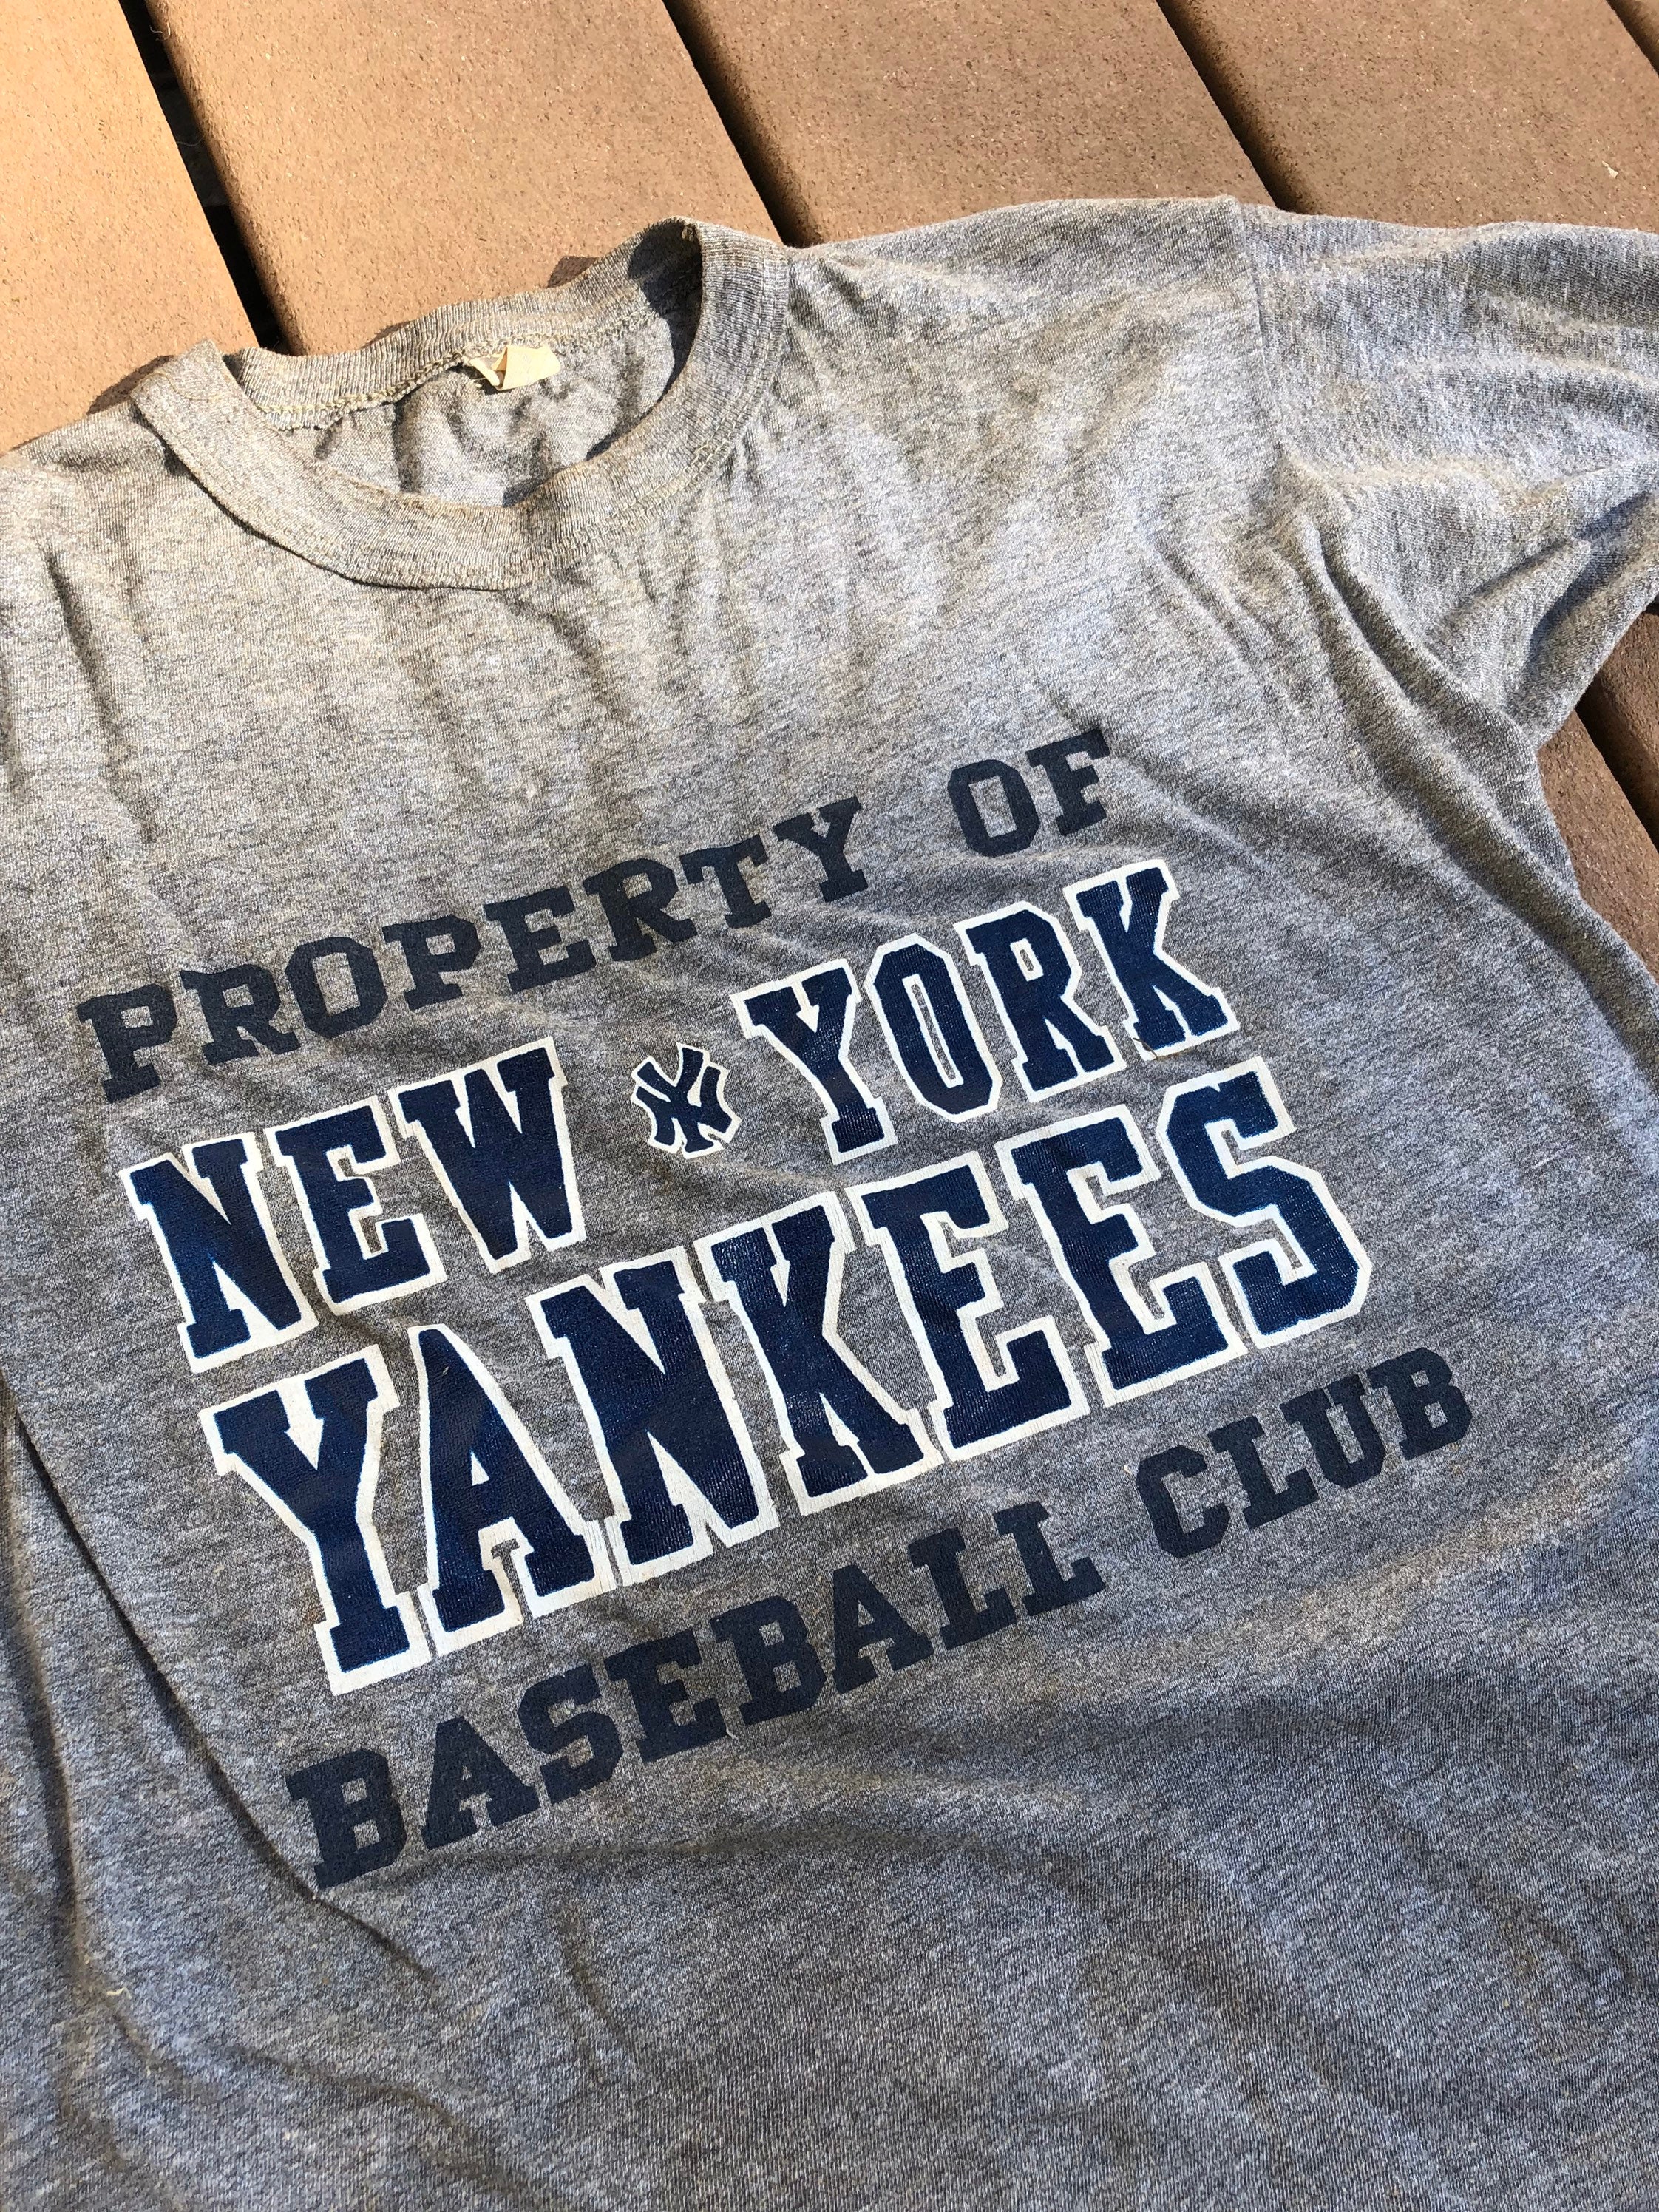 FunkyTownUniqueFinds Vintage T Shirt, New York Yankees, Yankees Tee, Vintage Clothing, 1970's, Vintage Sports T Shirt, Baseball